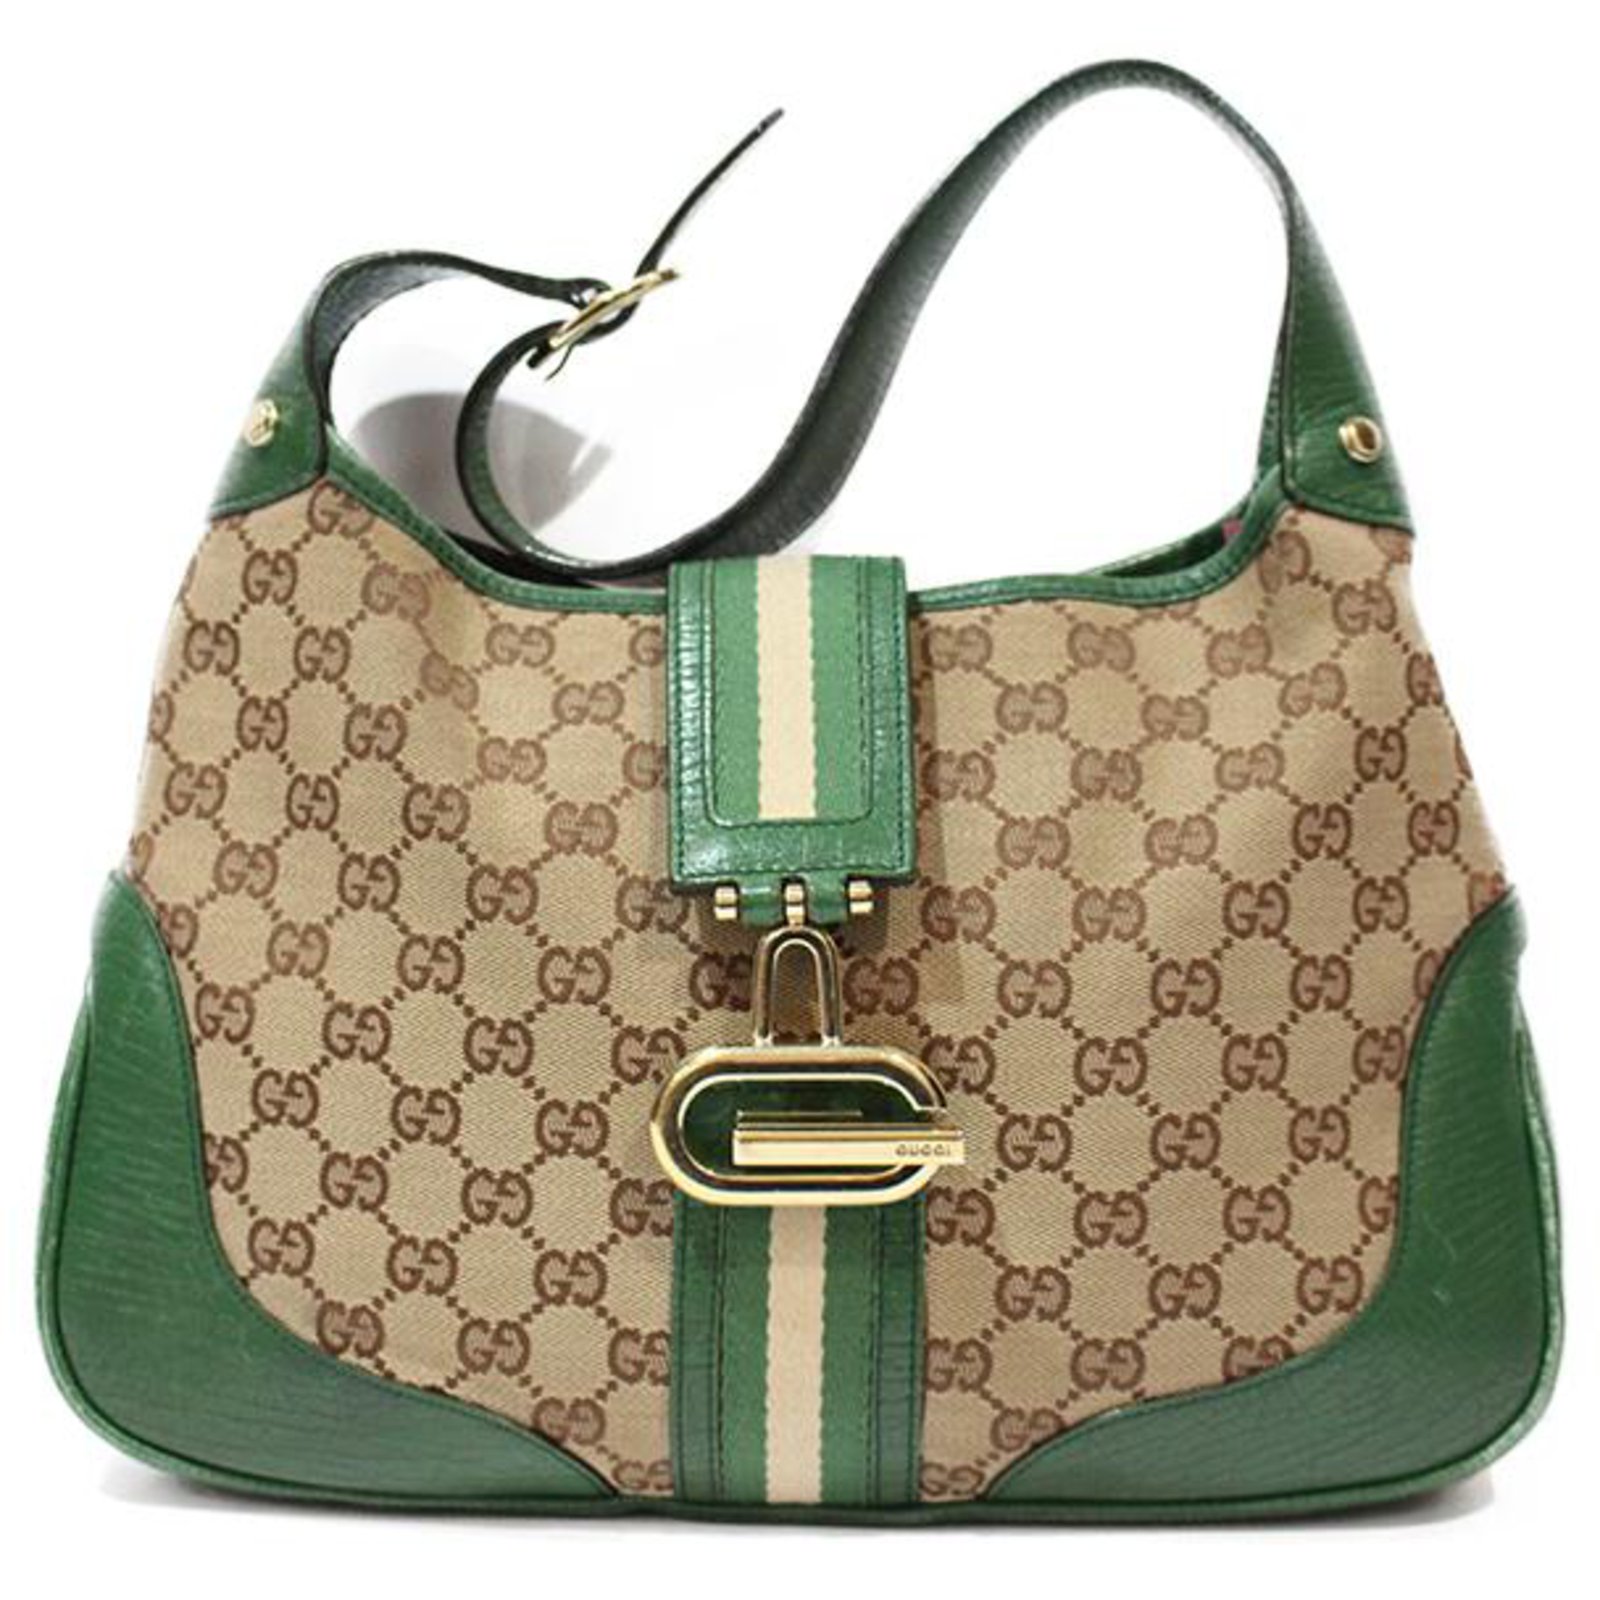 green leather gucci handbag